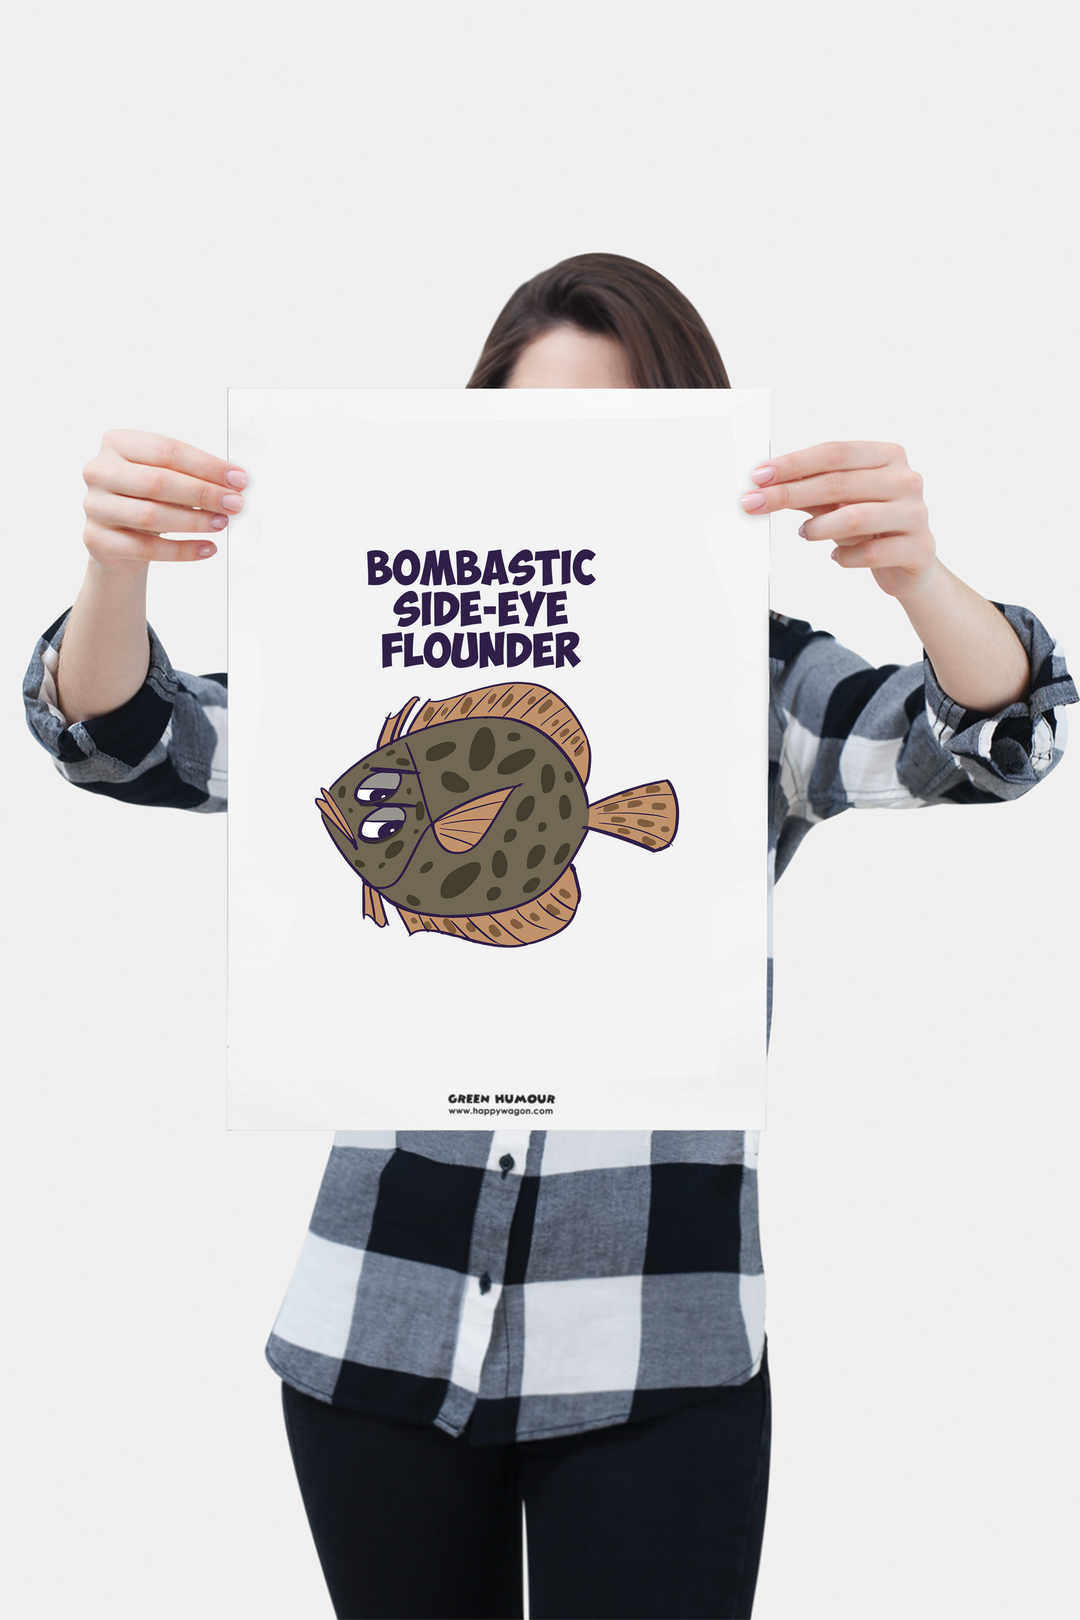 Bombastic Side-Eye Flounder Non Tearable Poster